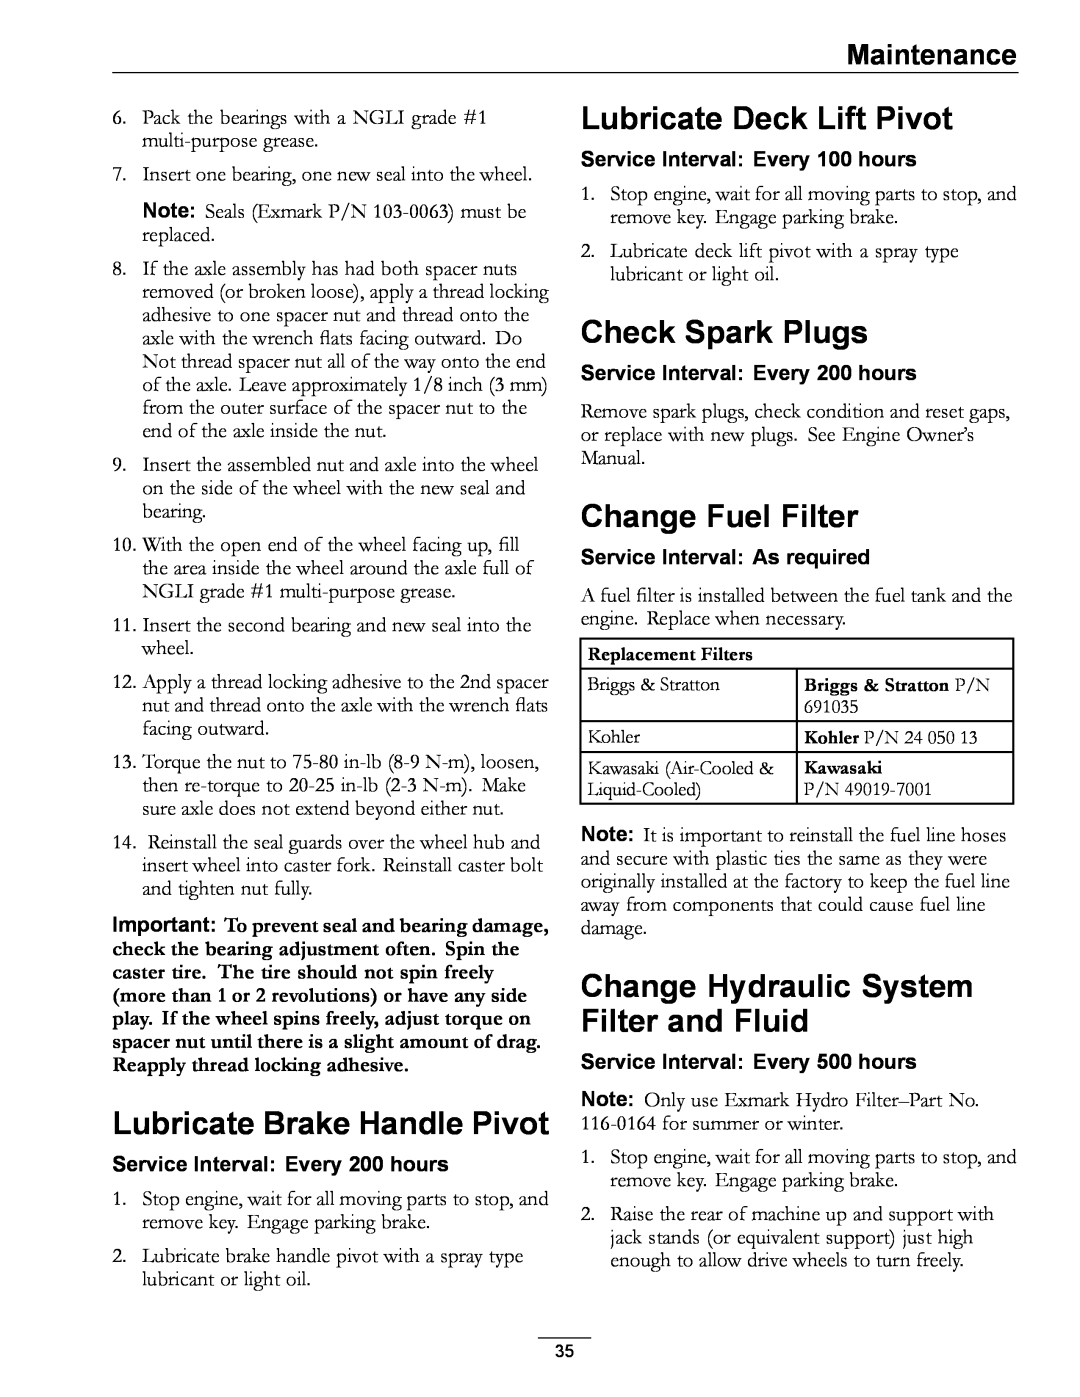 Exmark 000 & higher manual Lubricate Brake Handle Pivot, Lubricate Deck Lift Pivot, Check Spark Plugs, Change Fuel Filter 